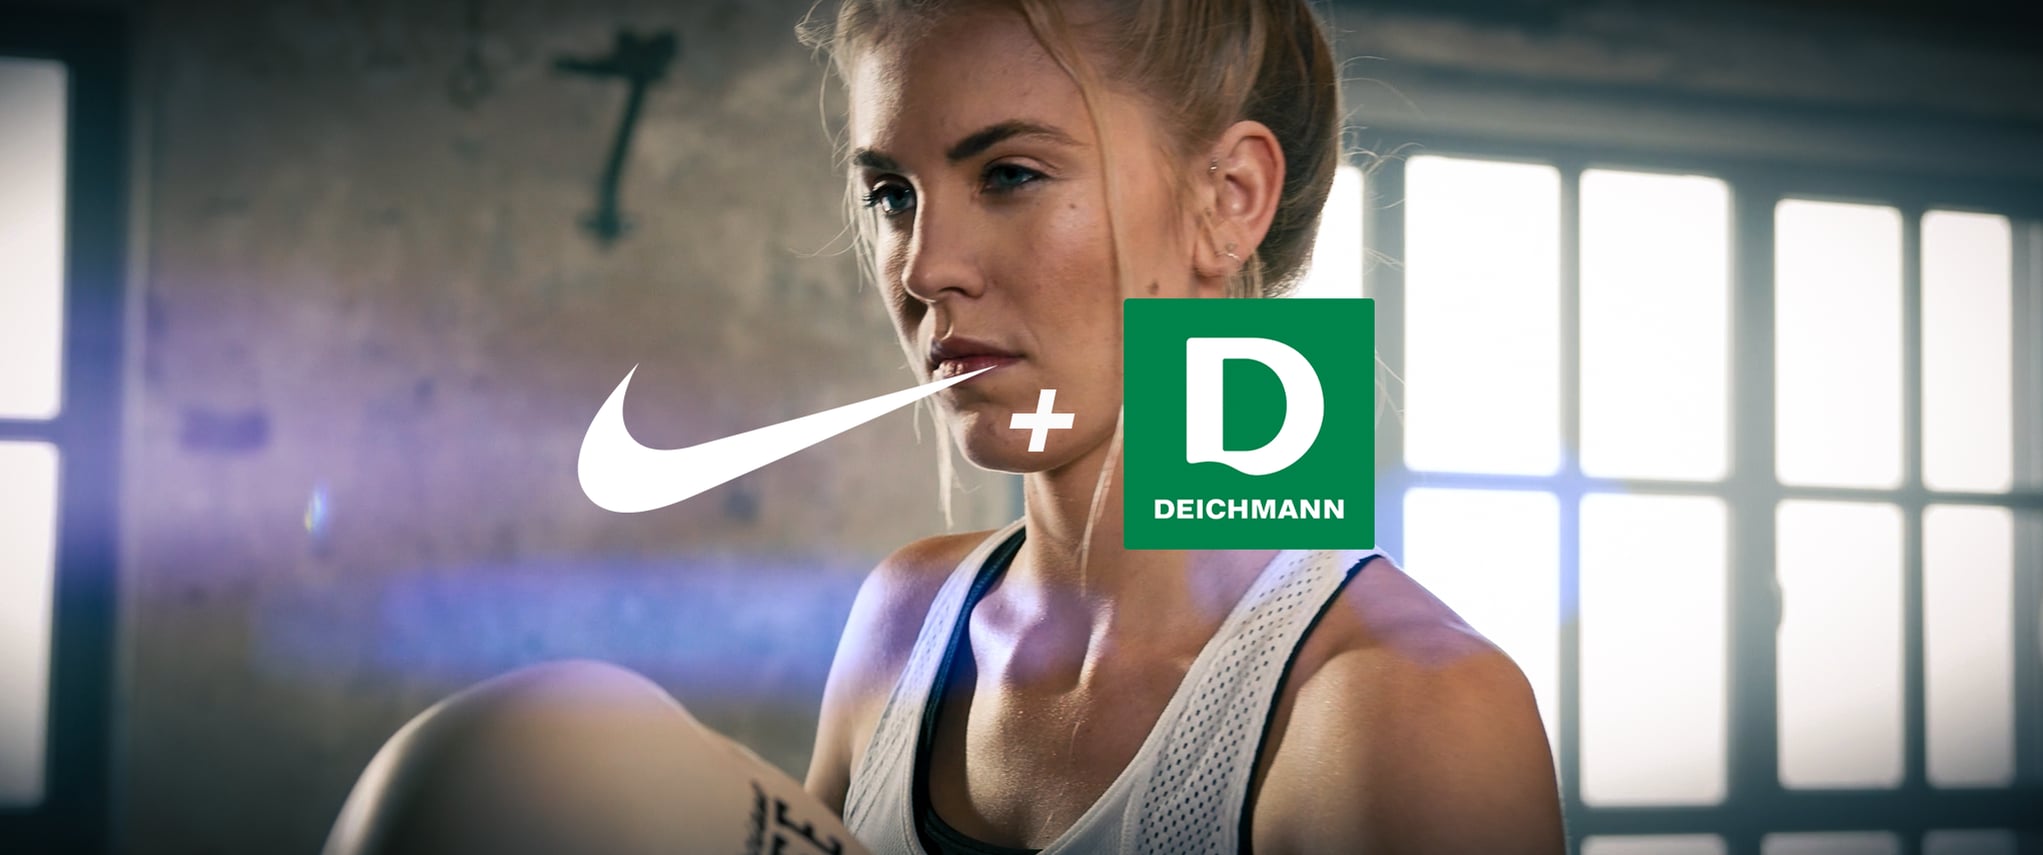 Makkelijk te lezen rek Indrukwekkend Deichmann - Nike Athleisure with Ann-Kathrin Boll - Spot 1 on Vimeo